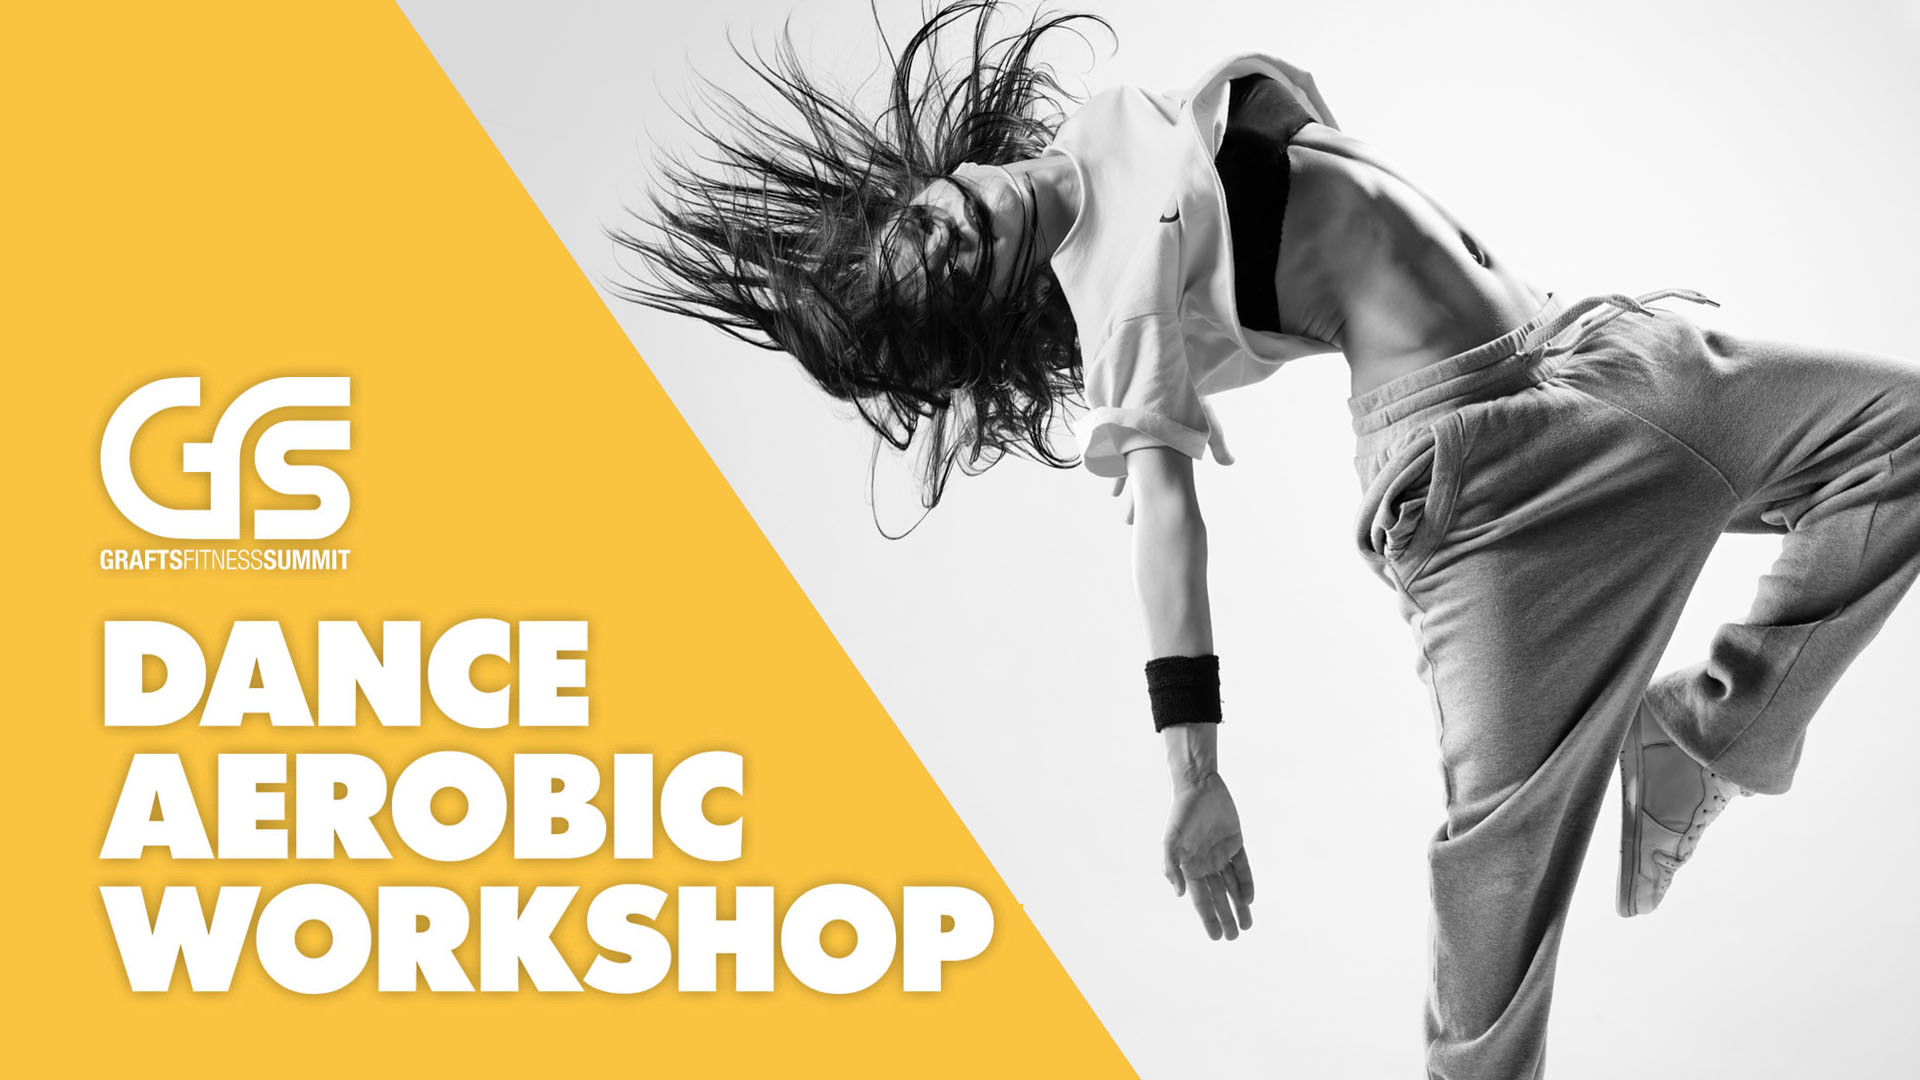 6th GRAFTS Fitness Summit - Dance Aerobic Workshop banner